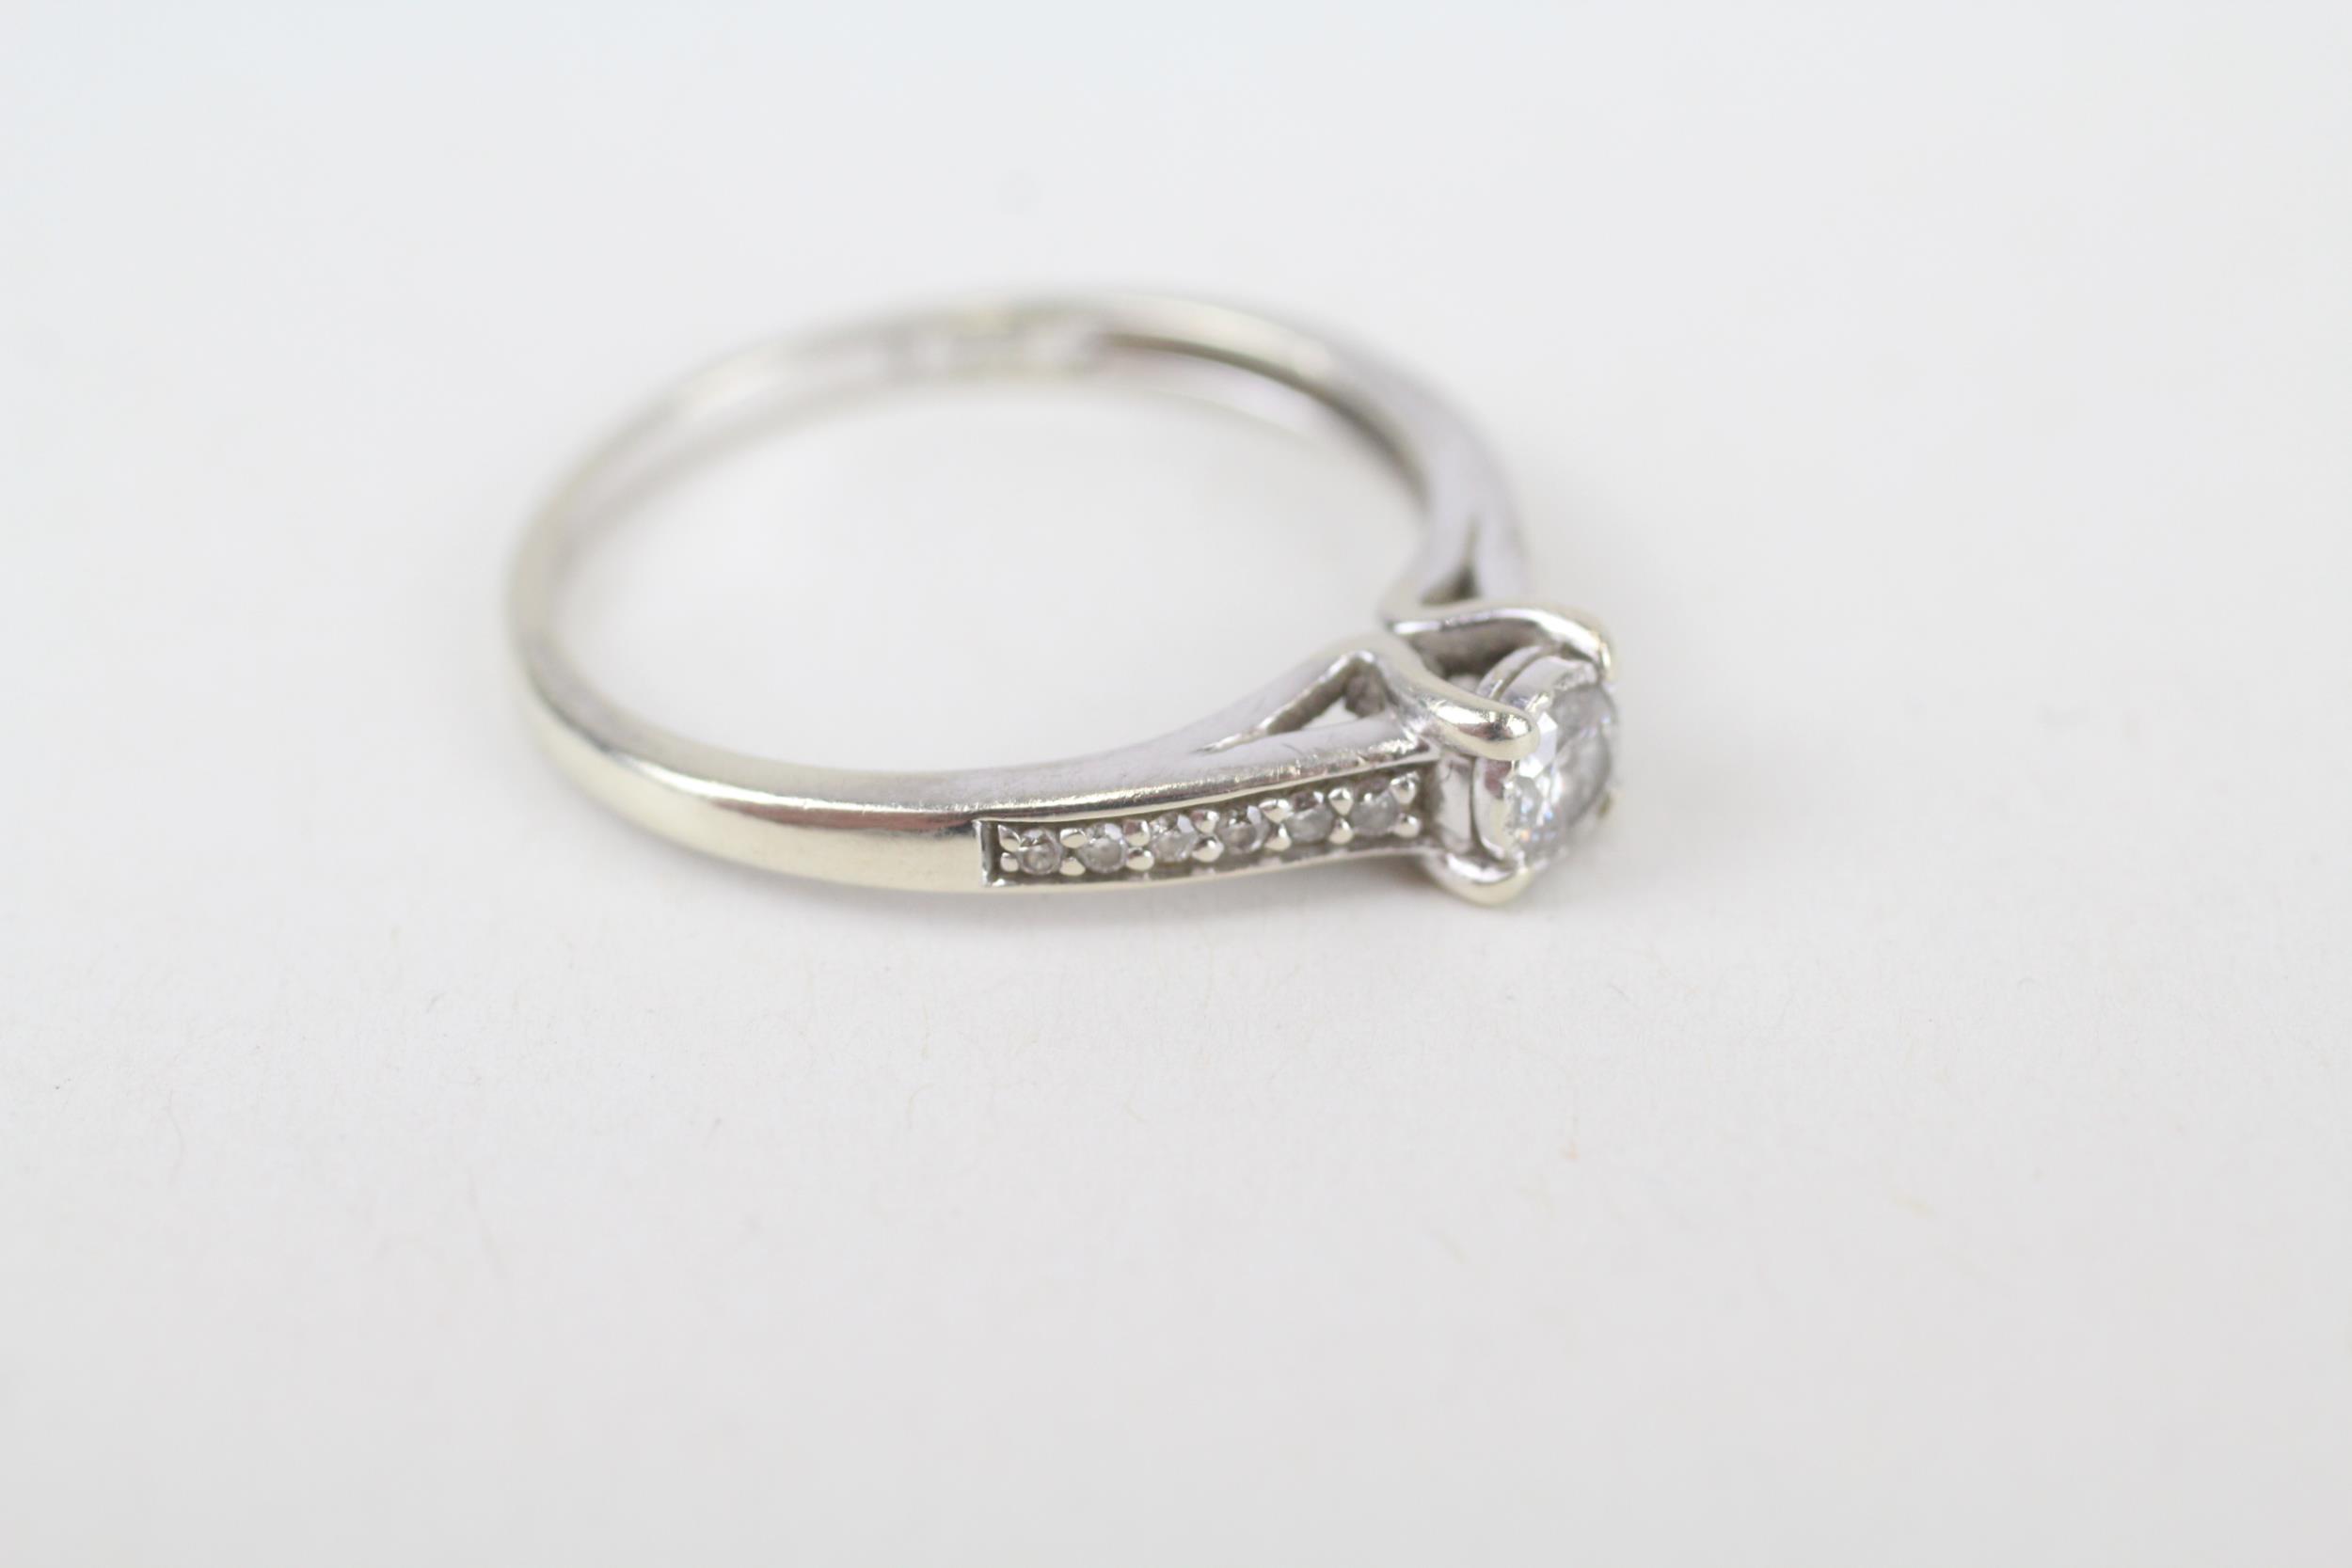 9ct gold round brilliant cut diamond single stone ring with diamond set shank Size O 1/2 2.3 g - Image 2 of 4